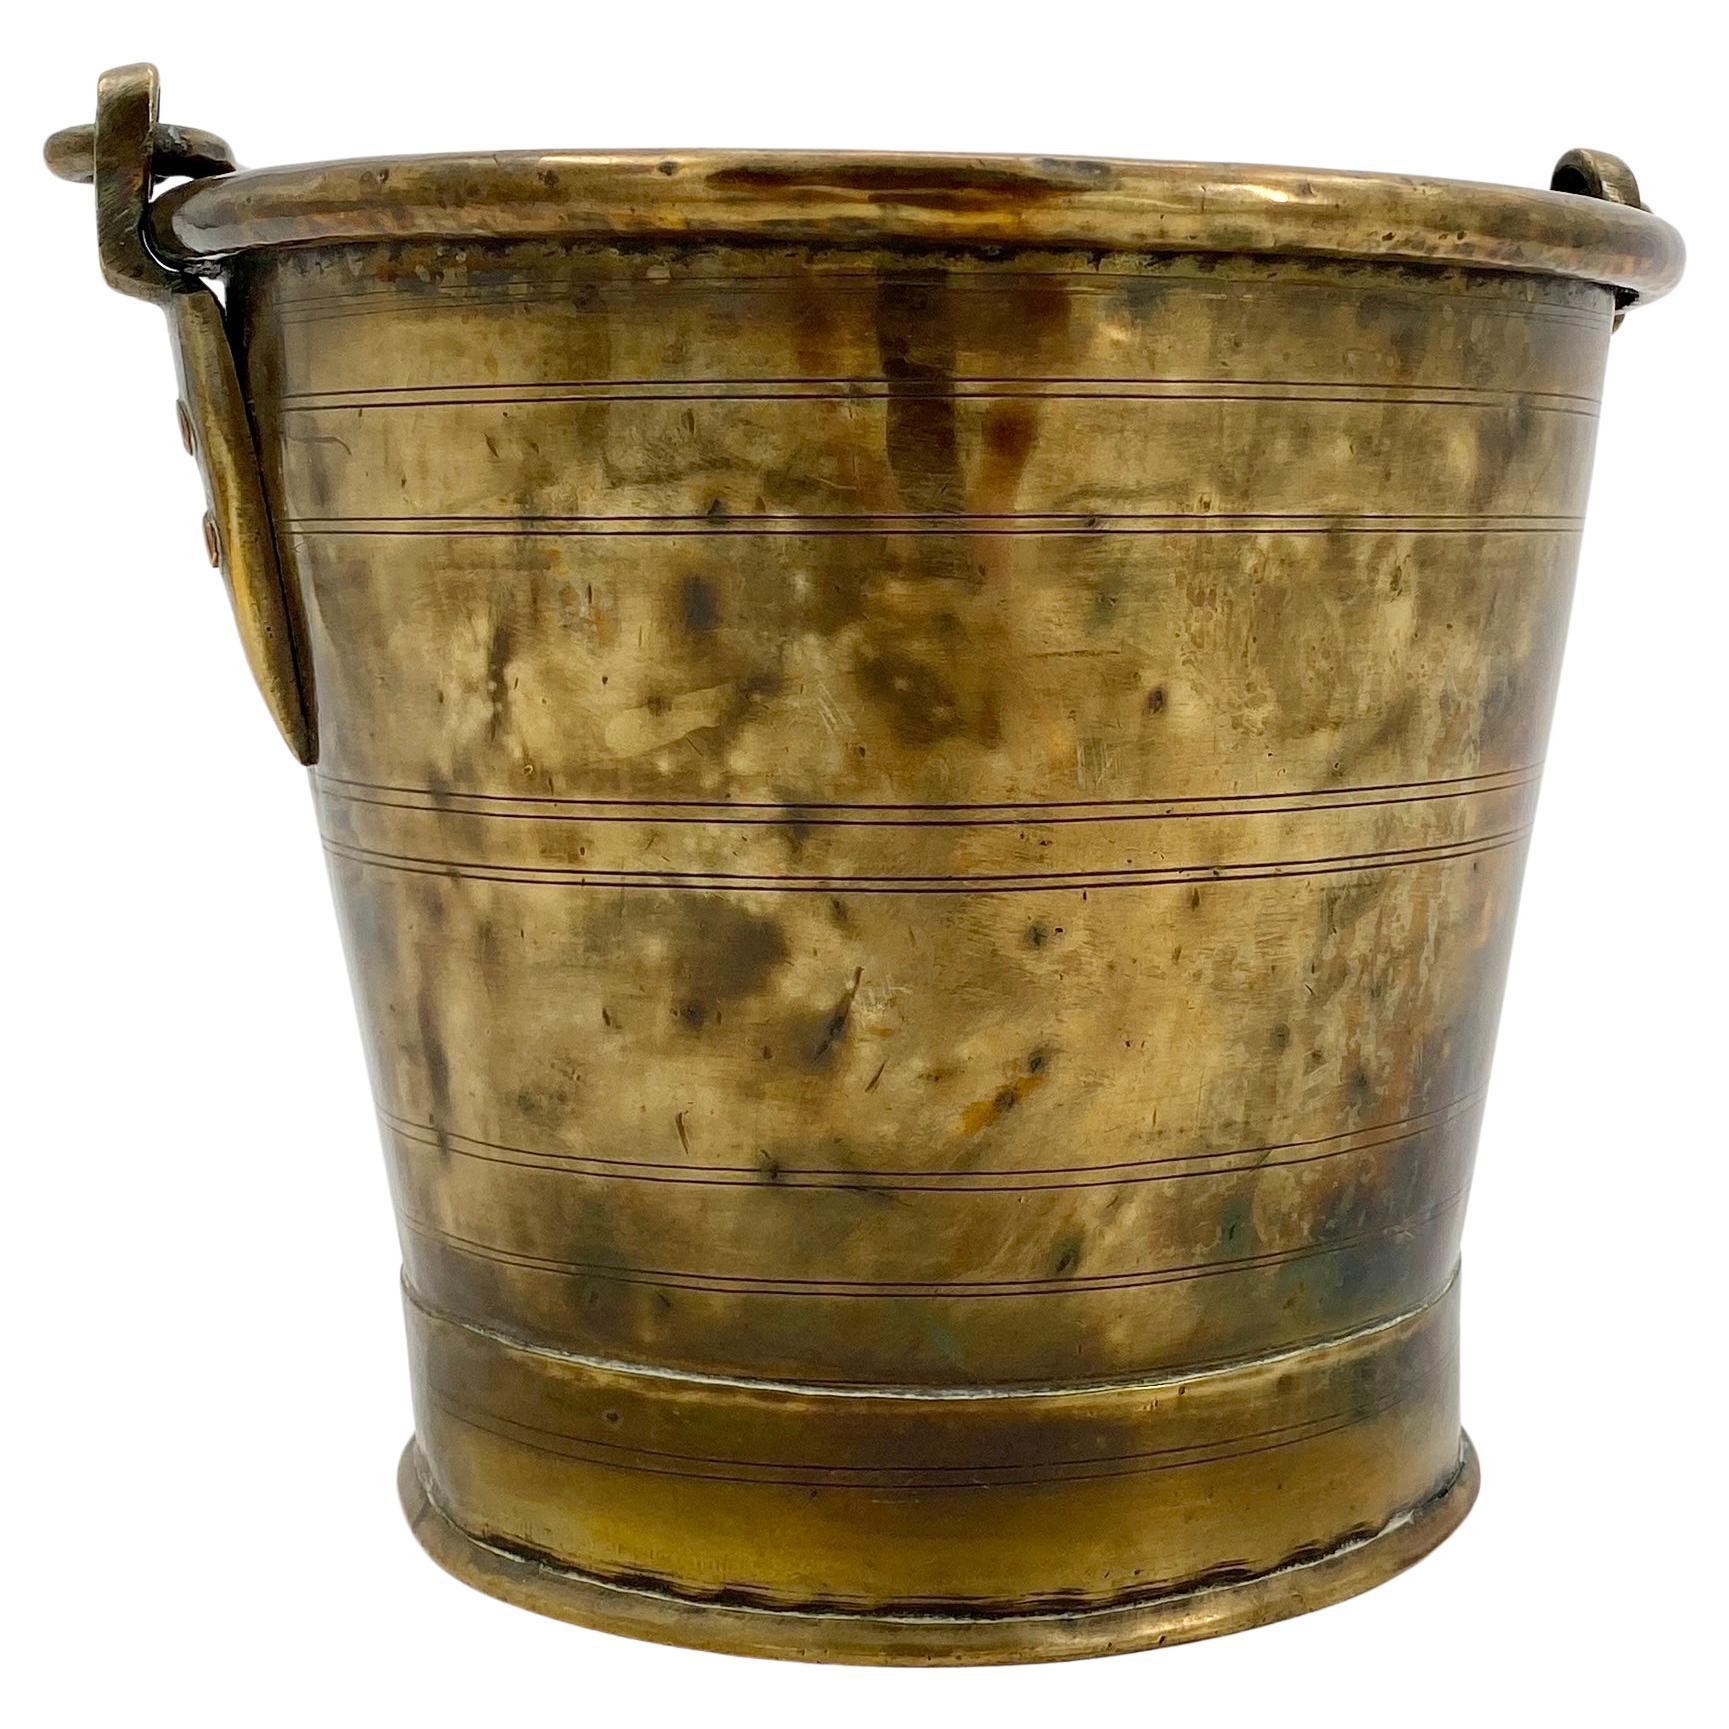 Danish Antique Scandinavian Coal or Fireplace Bucket in Brass, Circa 1810